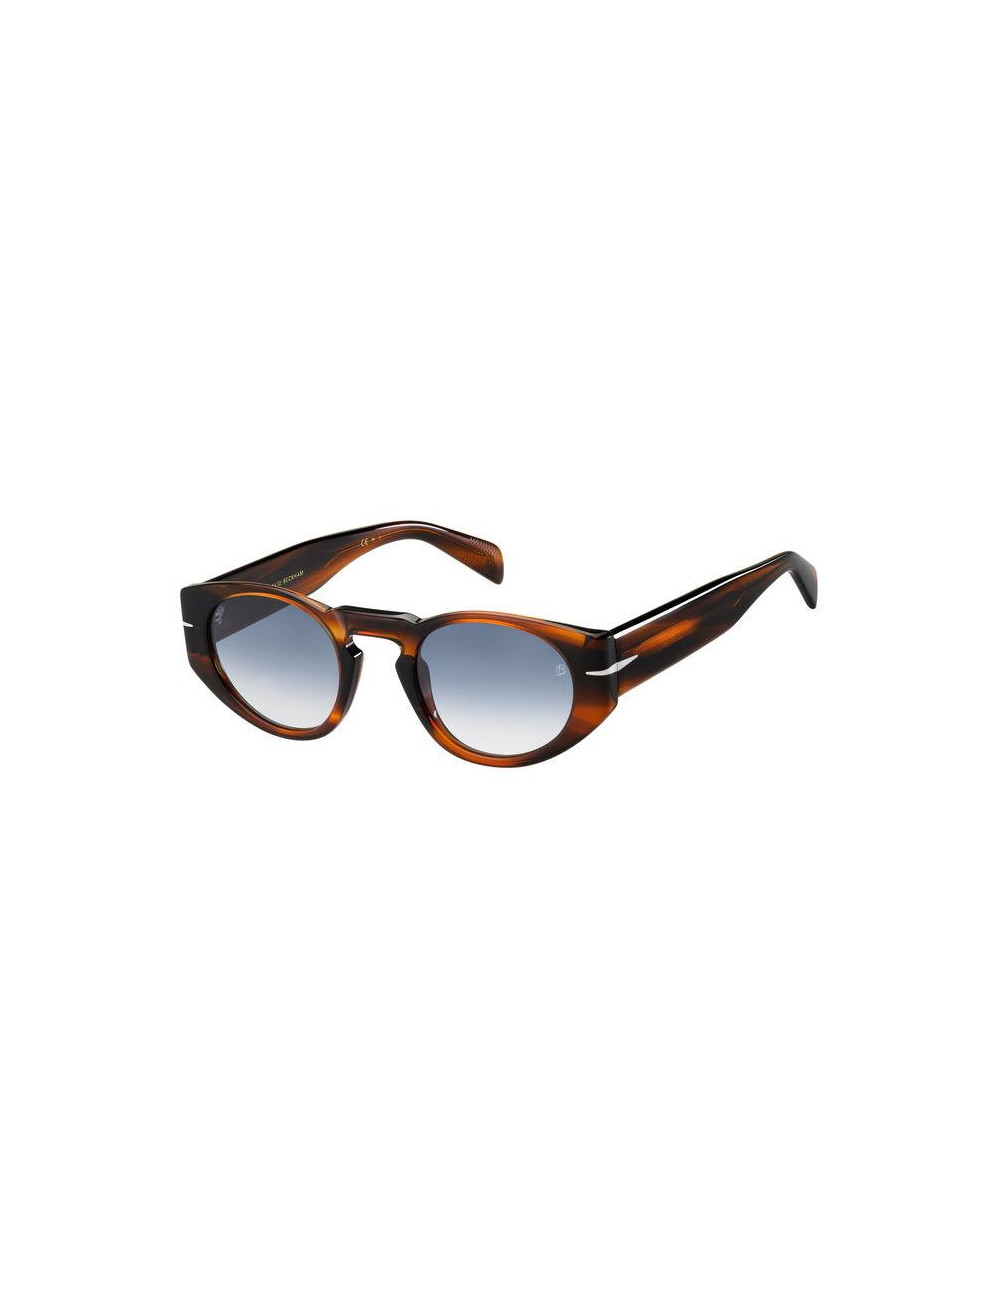 David Beckham Sunglasses DB 7044/S 02M2-HA - Best Price and Available as  Prescription Sunglasses